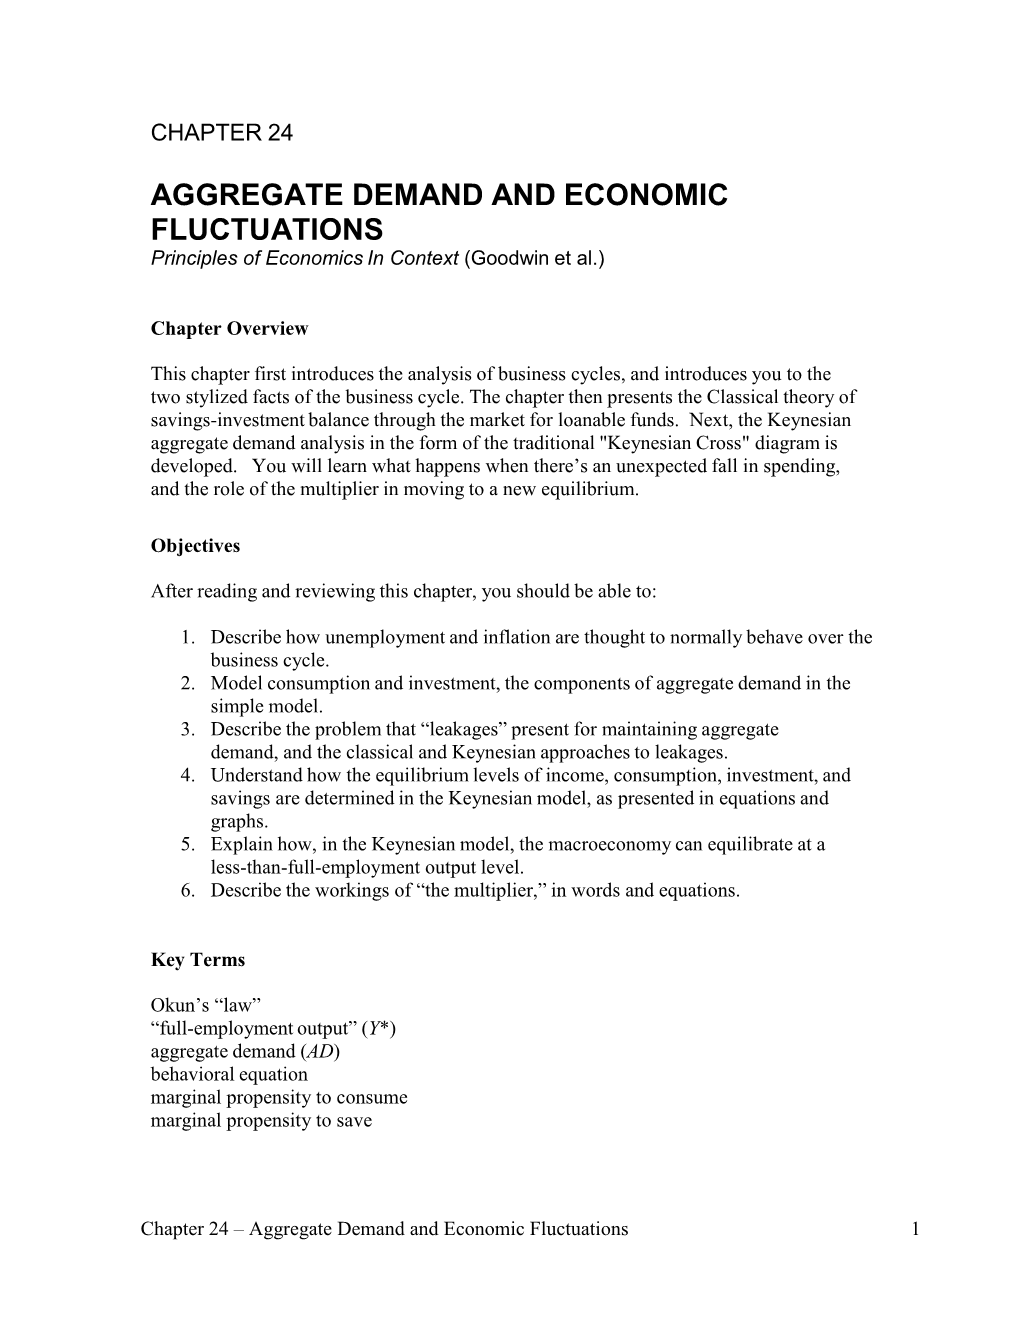 AGGREGATE DEMAND and ECONOMIC FLUCTUATIONS Principles of Economics in Context (Goodwin Et Al.)